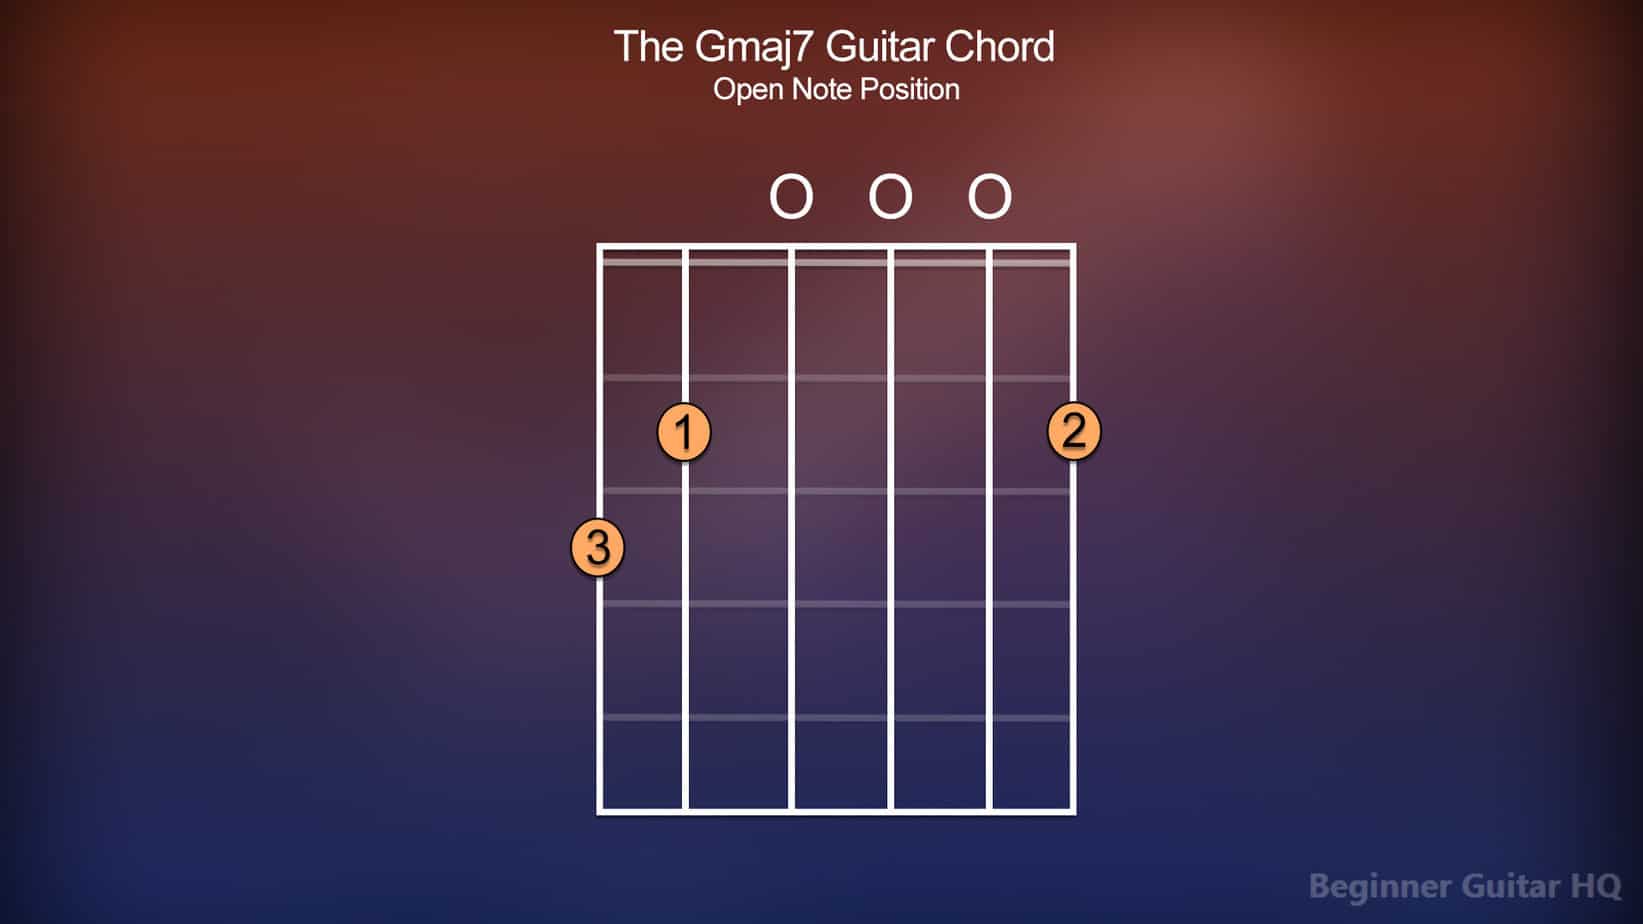 gmaj7 chord guitar